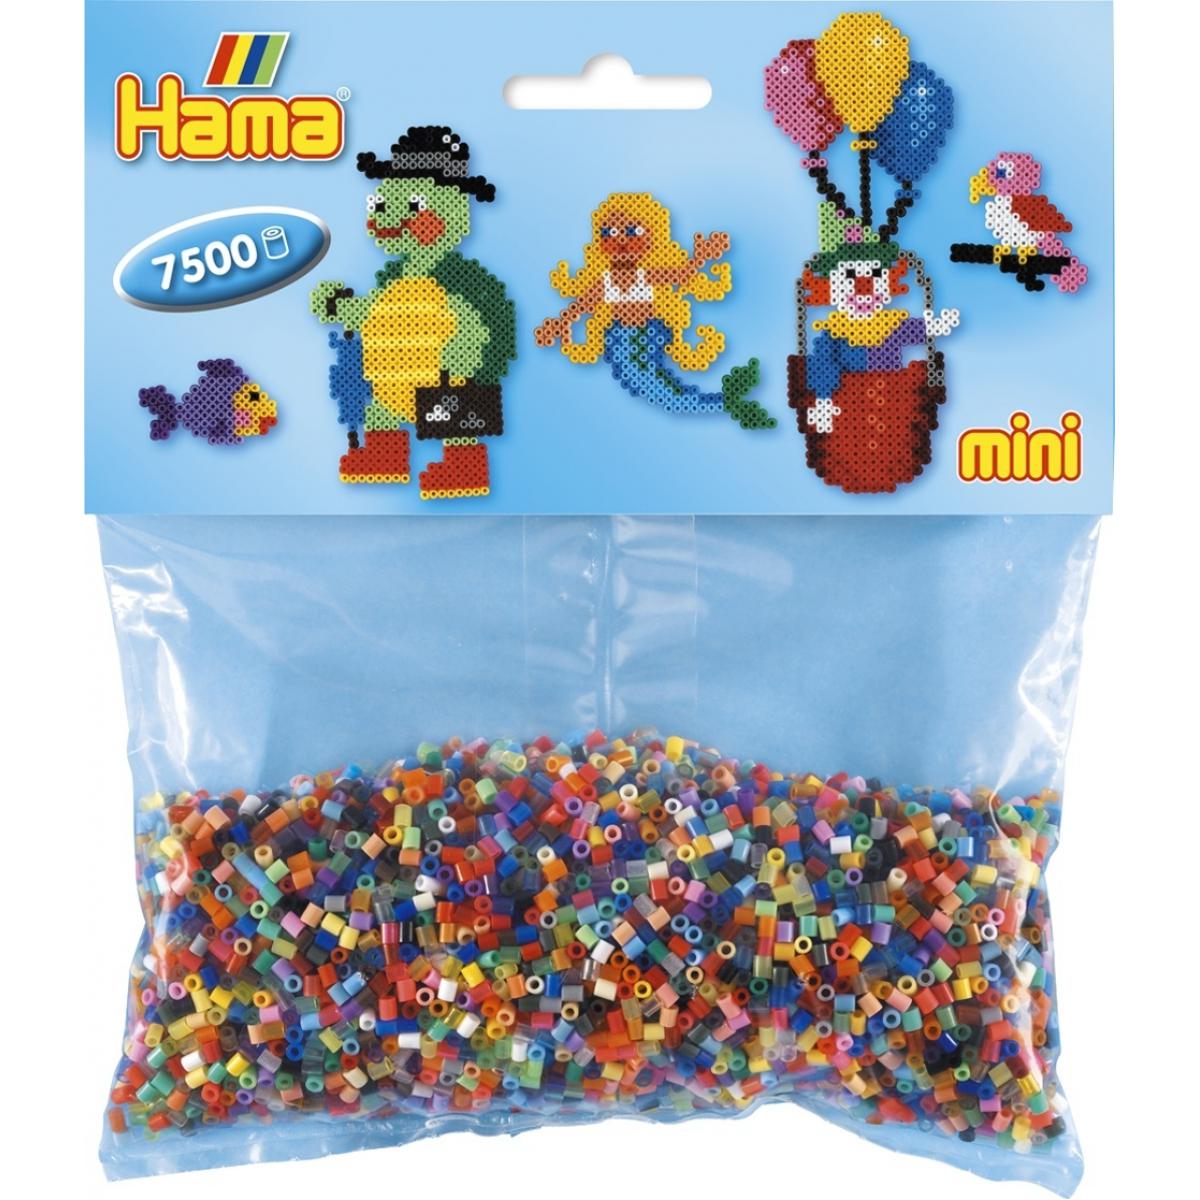 Hama - 7 500 perles mini (petites perles Ø2,5 mm) 48 couleurs - Hama - Perles